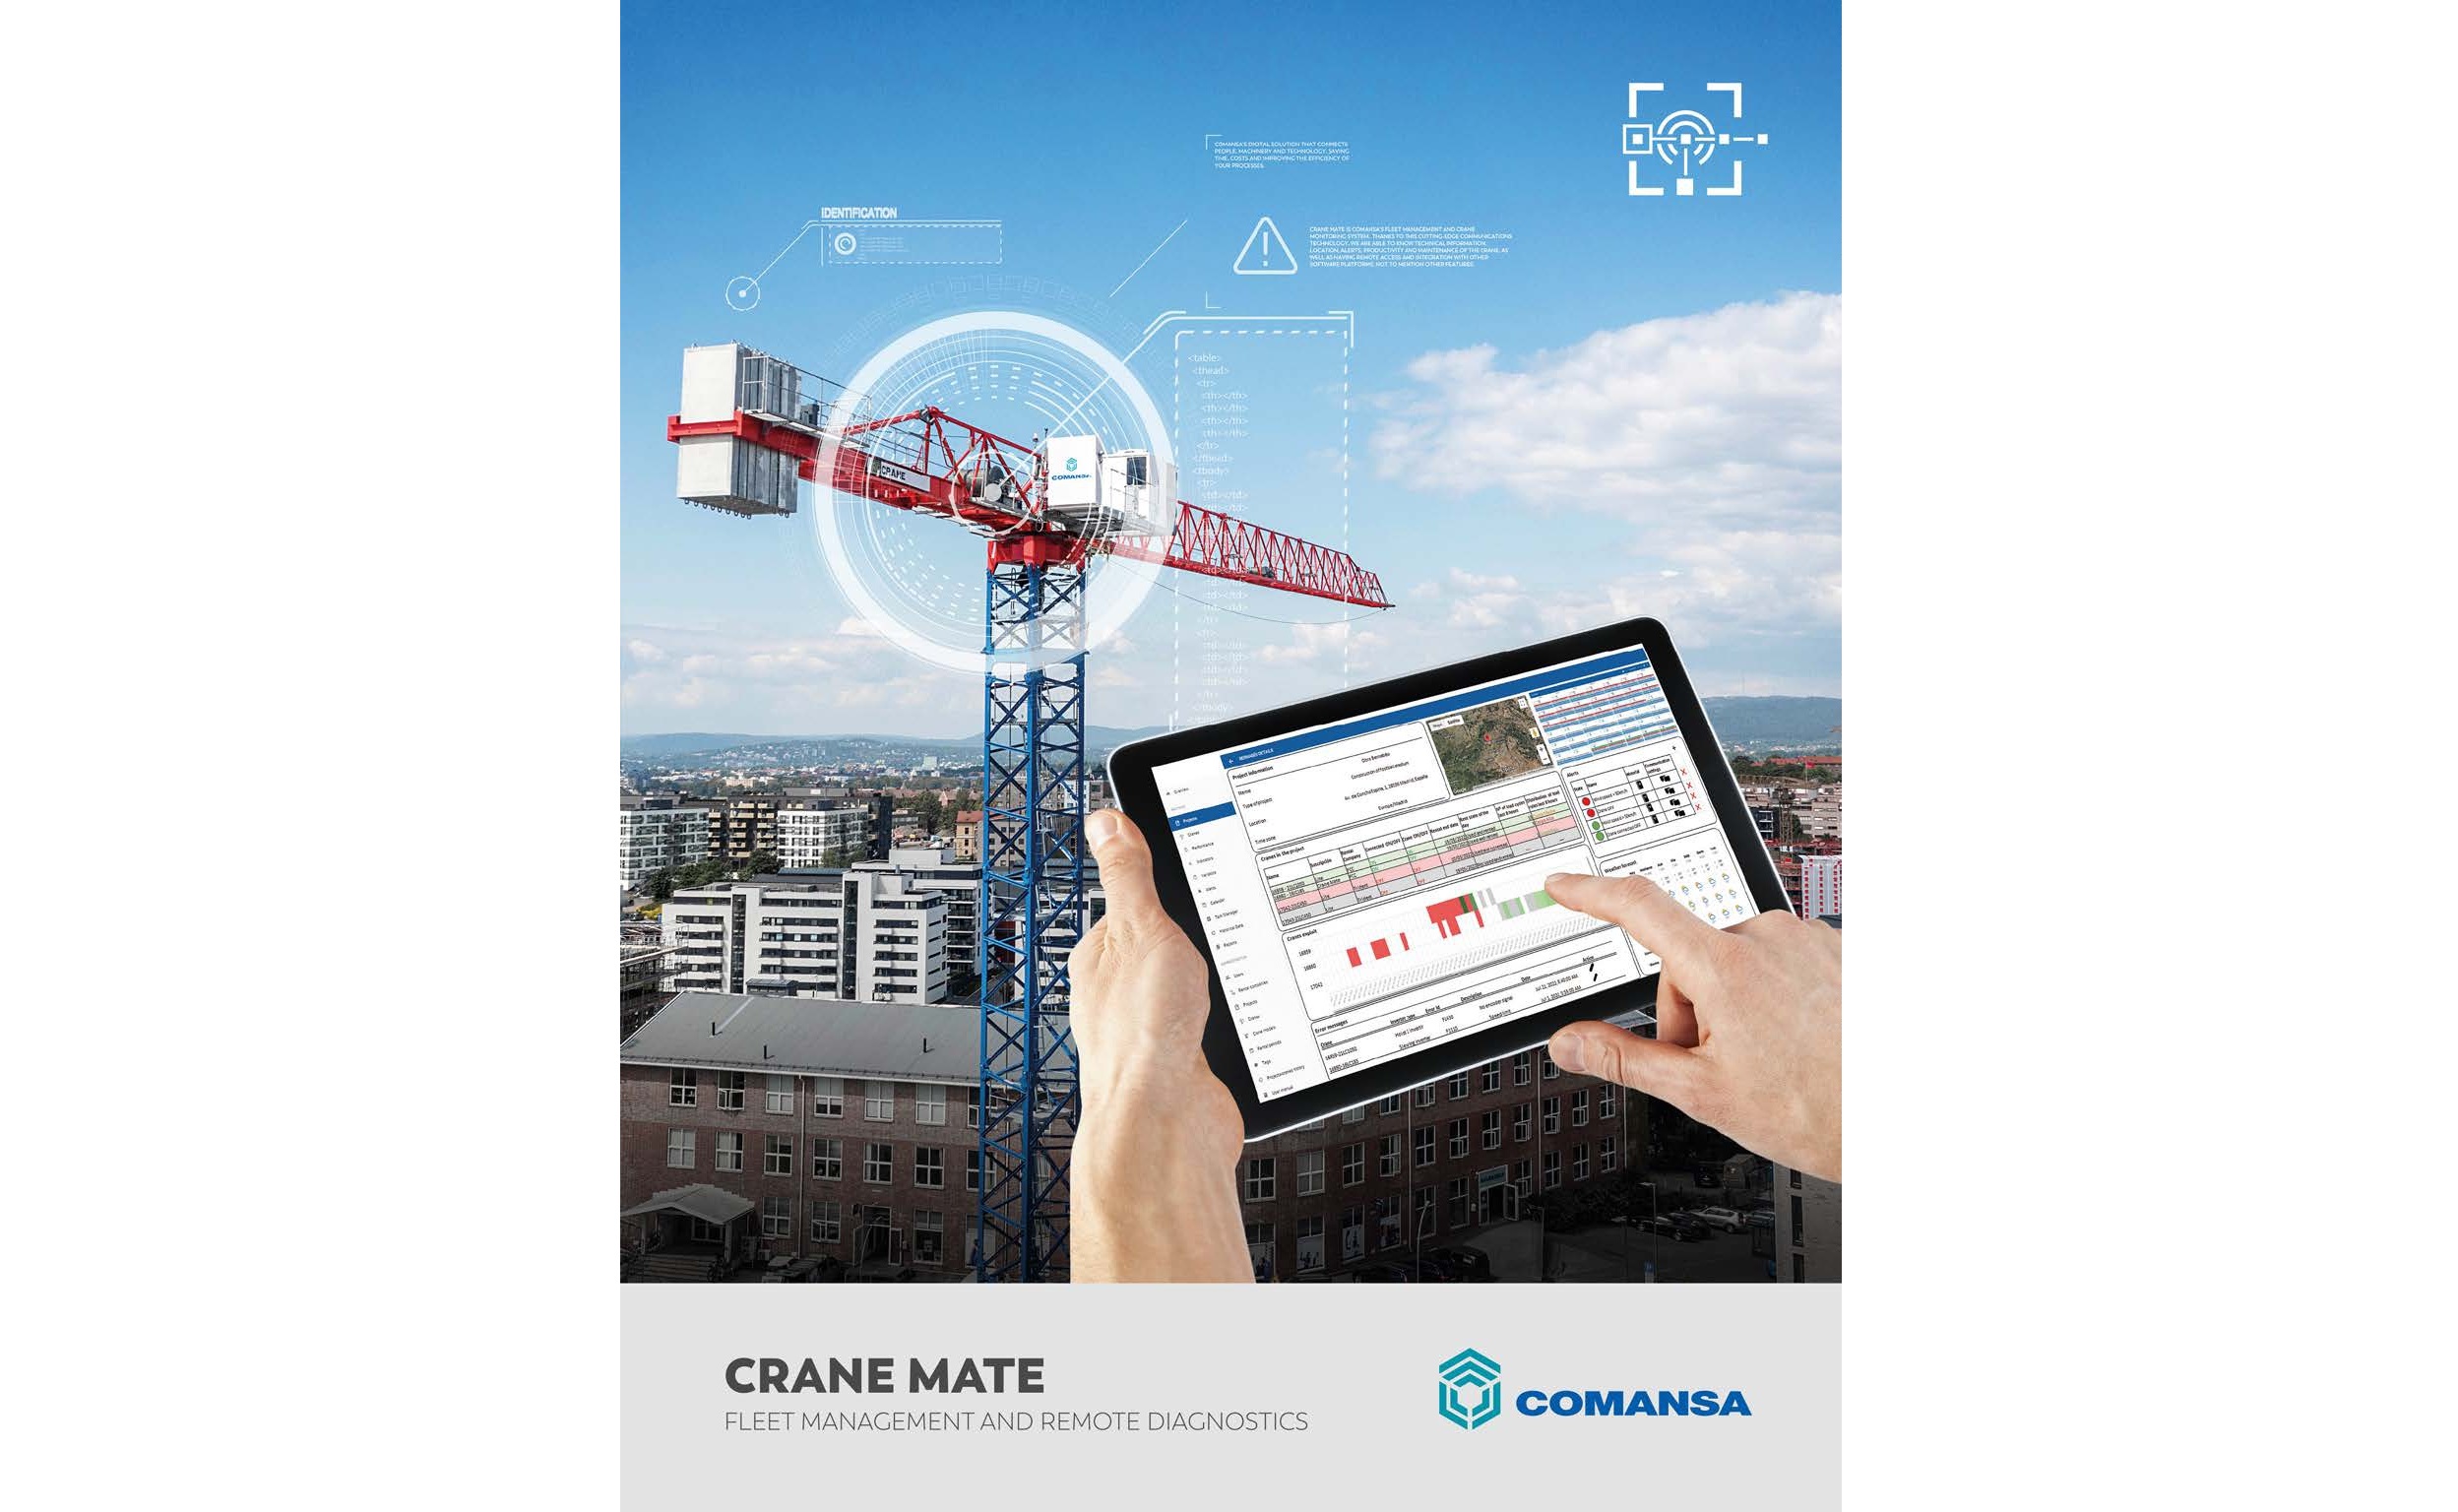 Comansa presents Crane Mate, its novel digital solution for fleet management